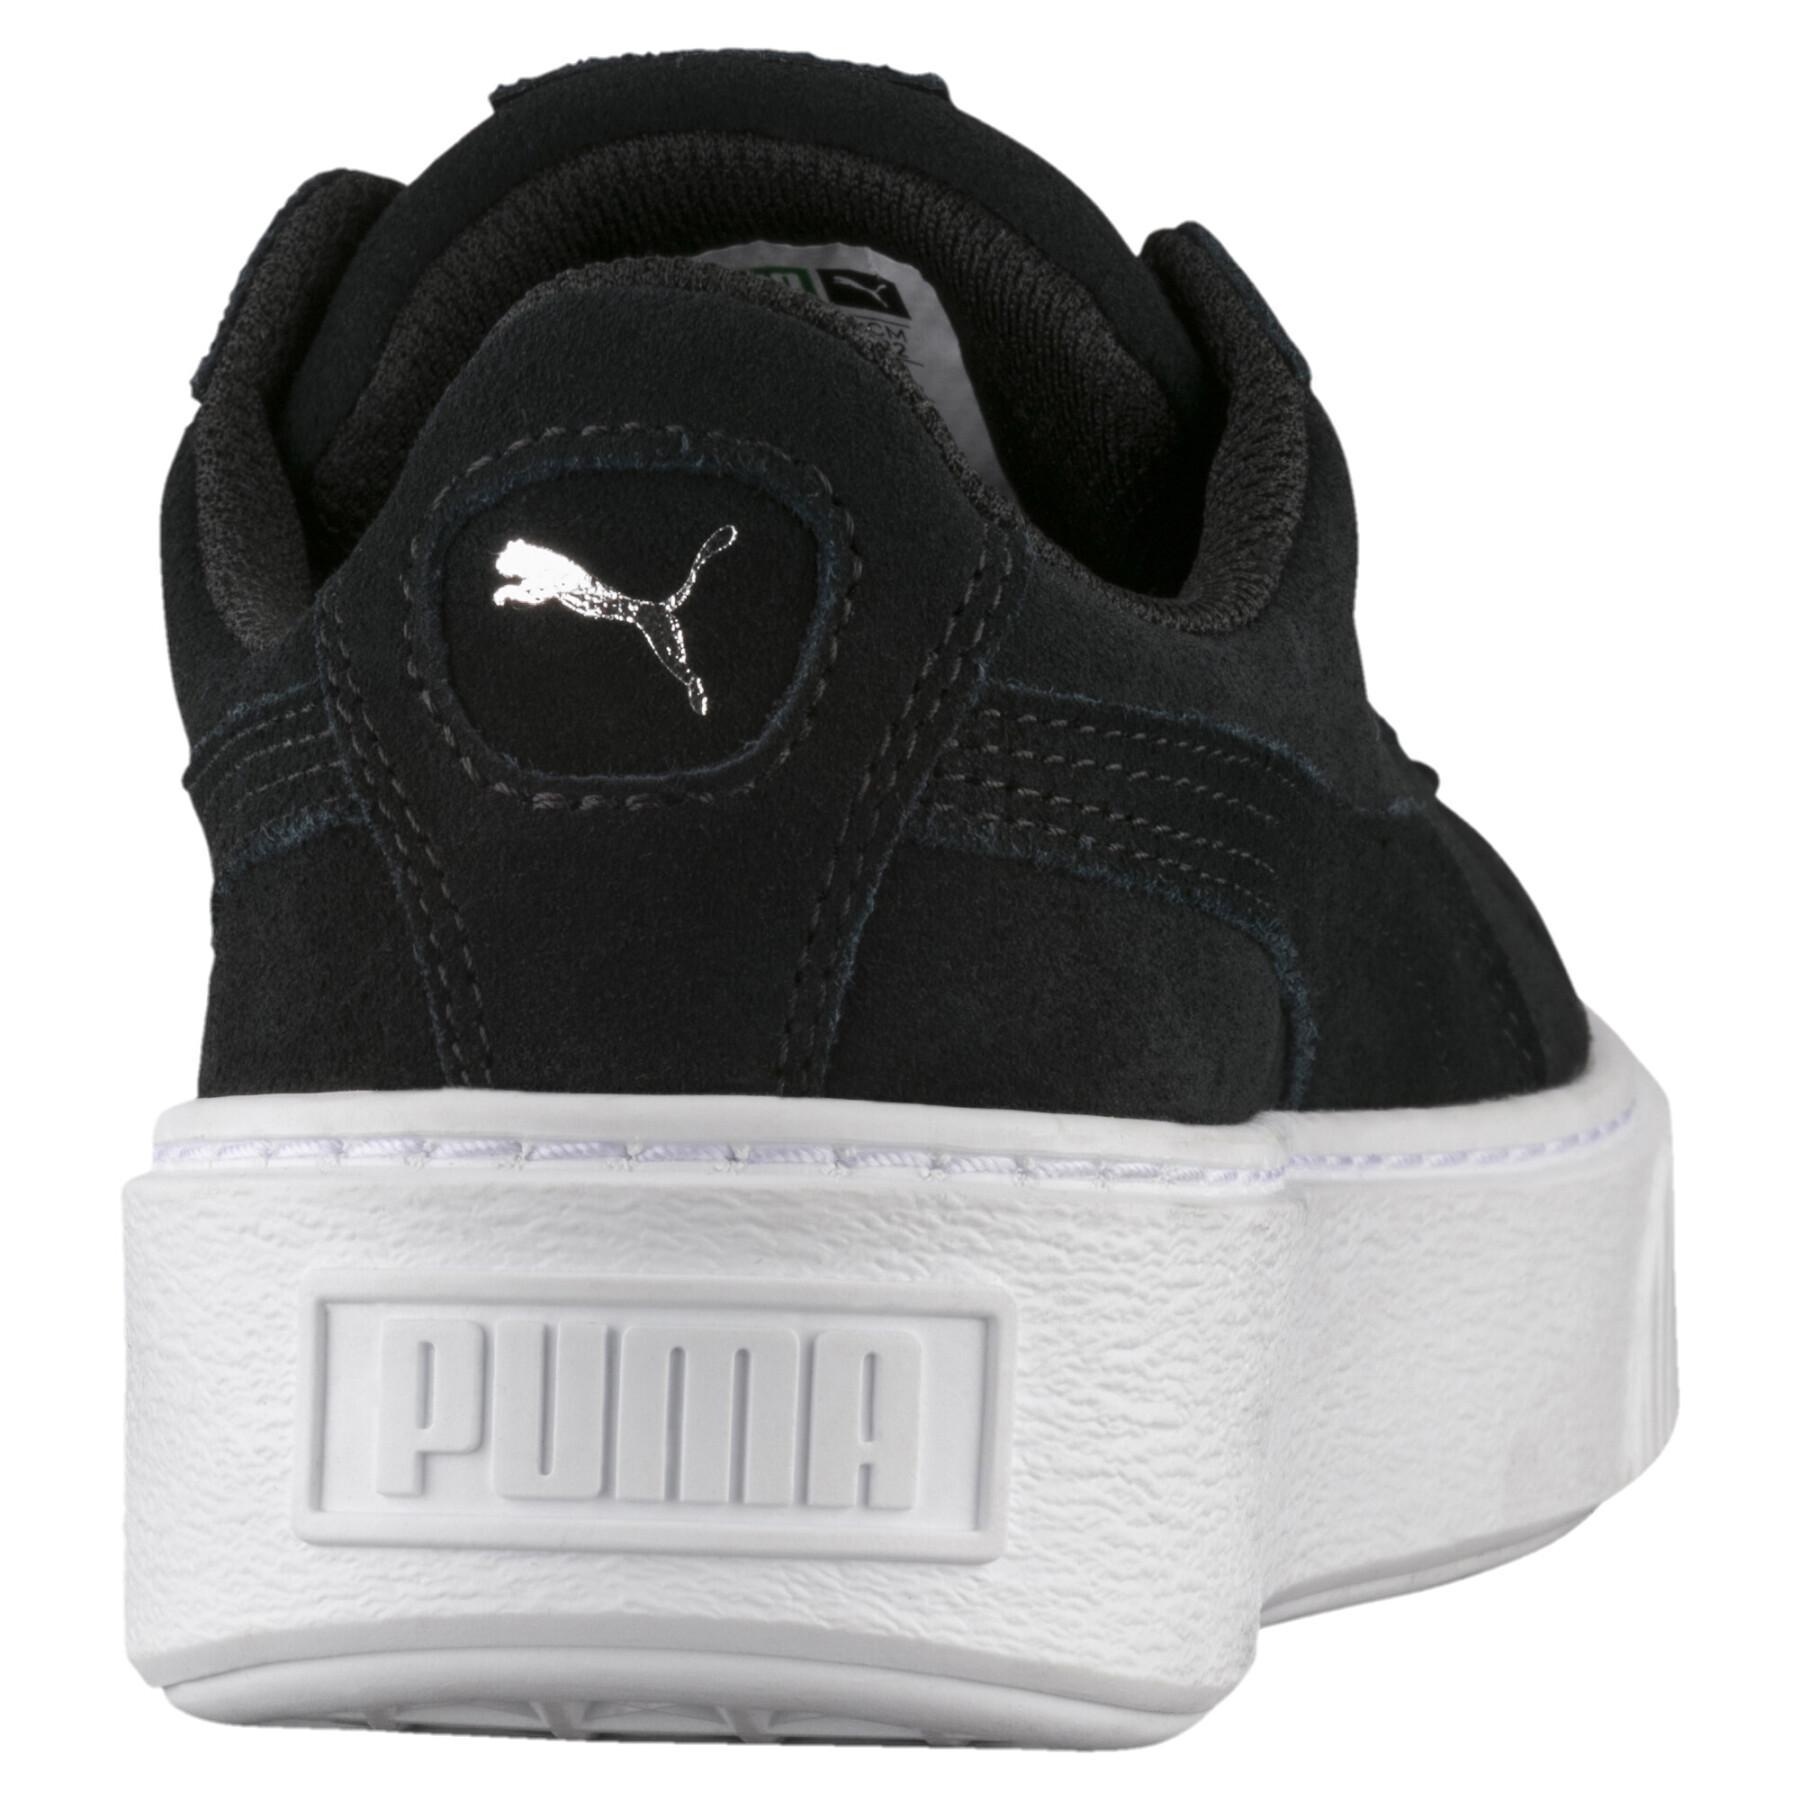 Children's sneakers Puma Suede Platform